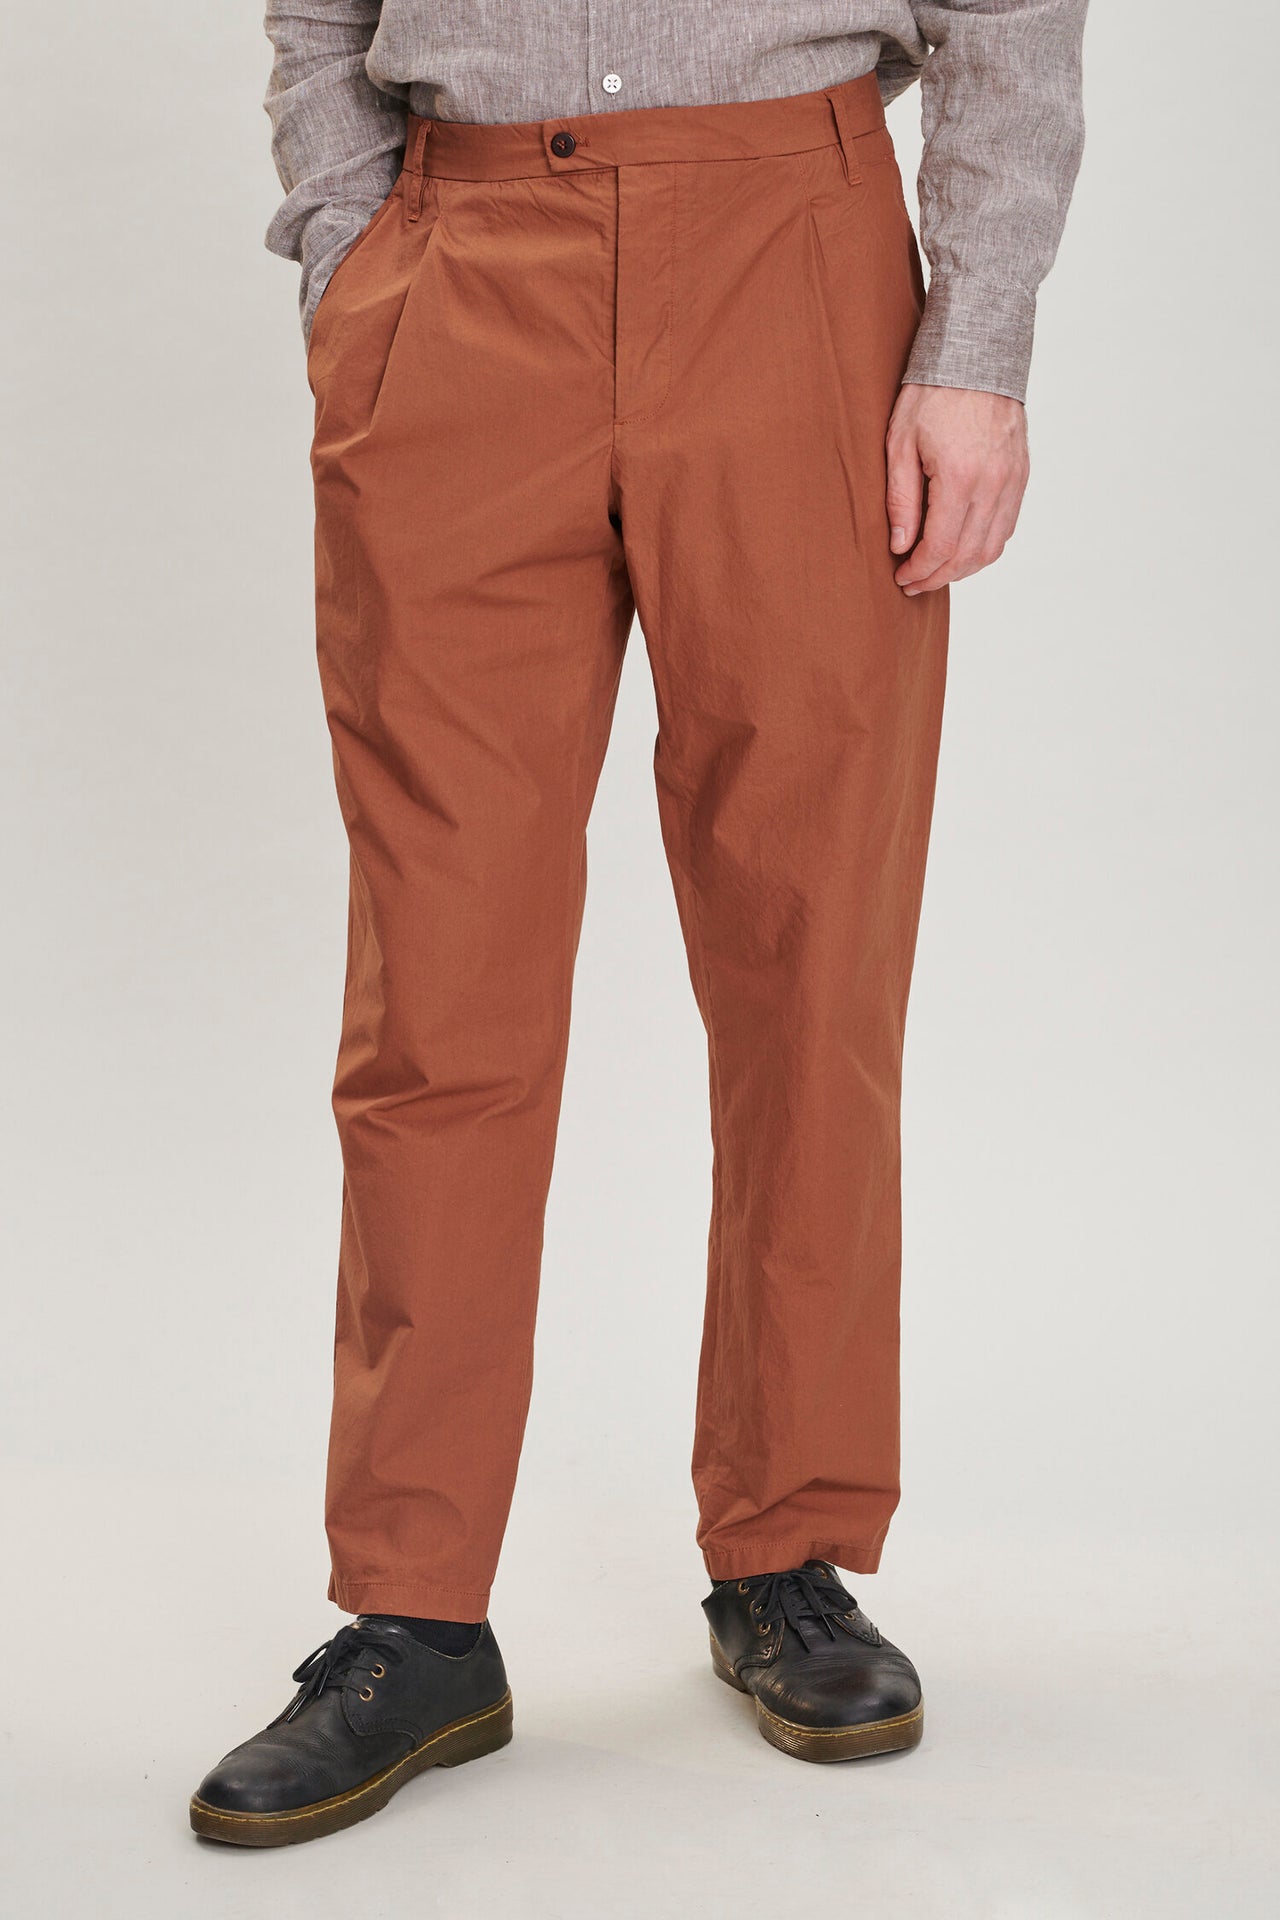 Trousers in a Rusty Coloured Italian Cotton Poplin